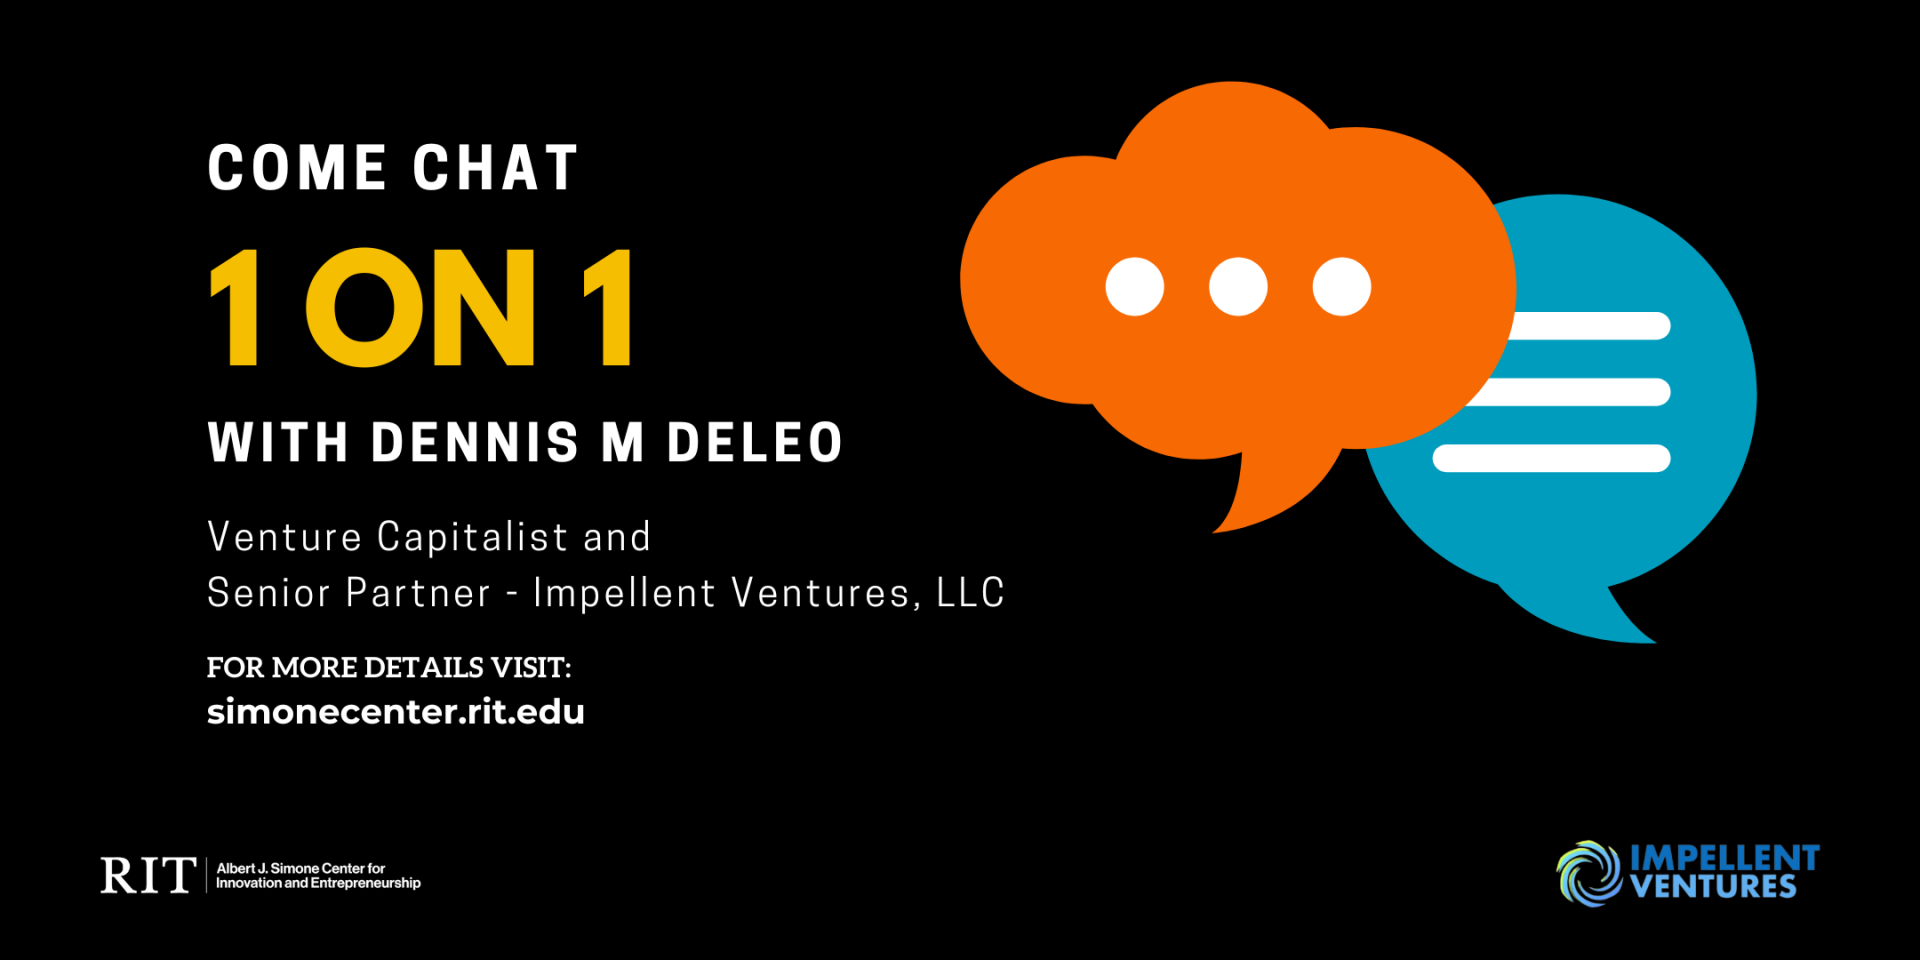 Meet with Venture Capitalist, Denny DeLeo